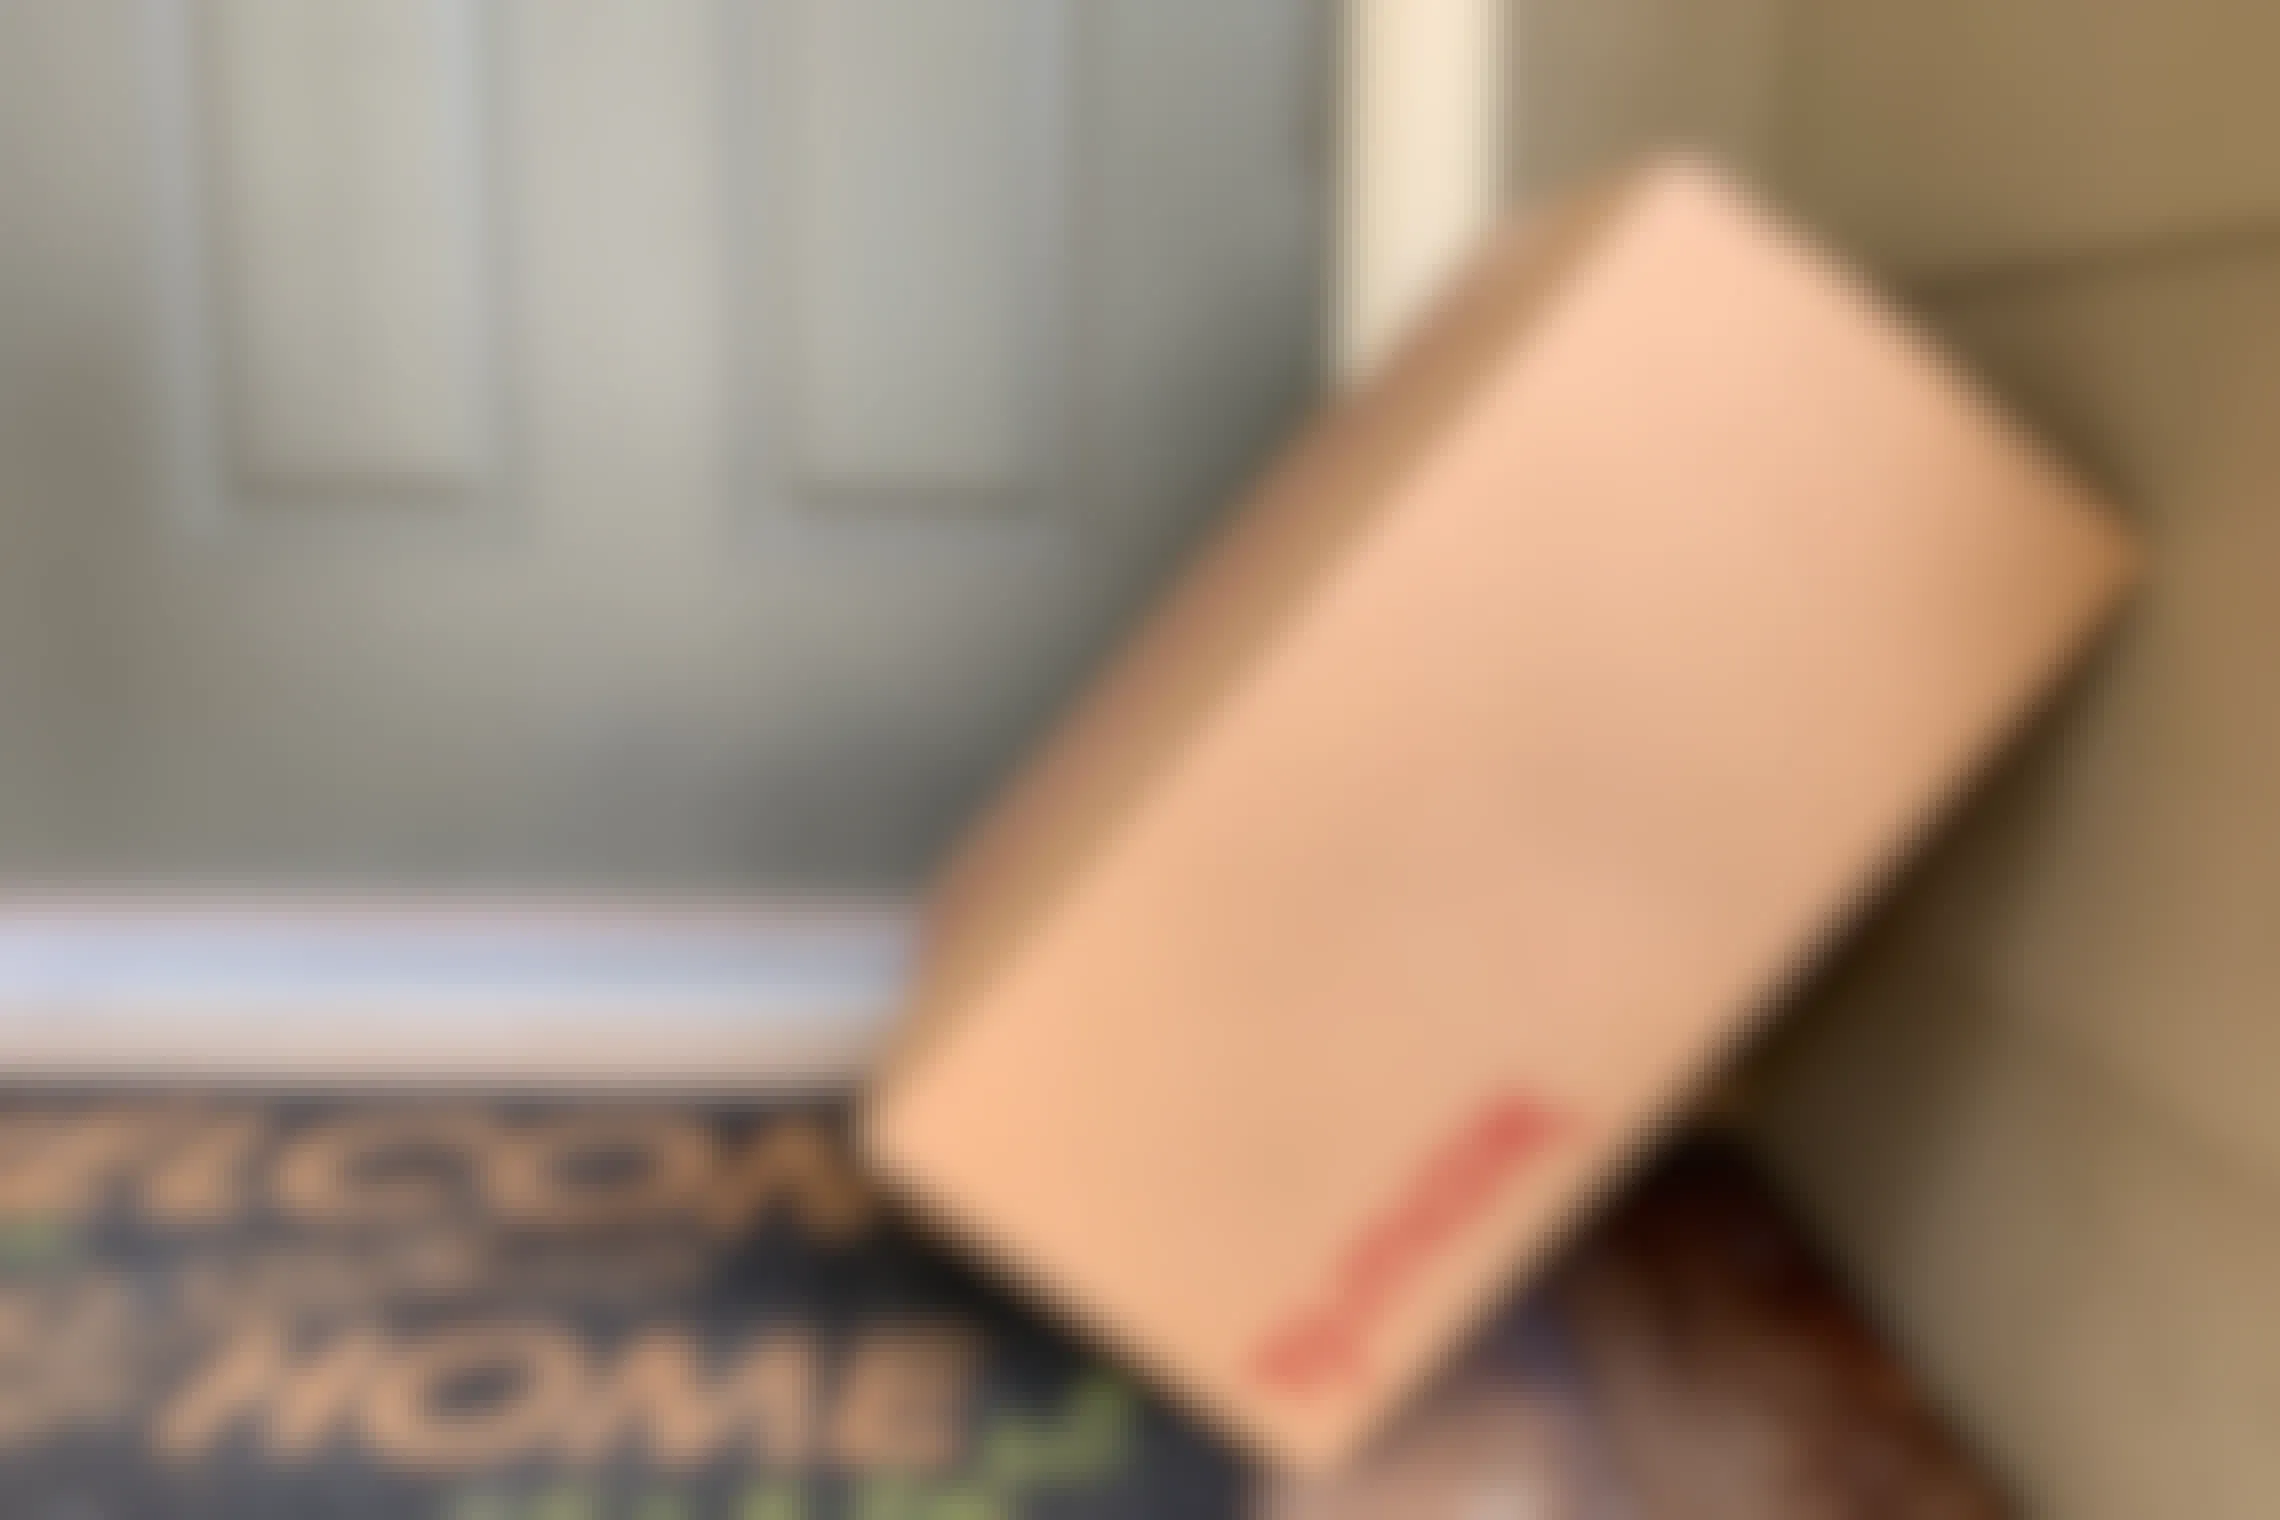 TJ Maxx box on a doorstep